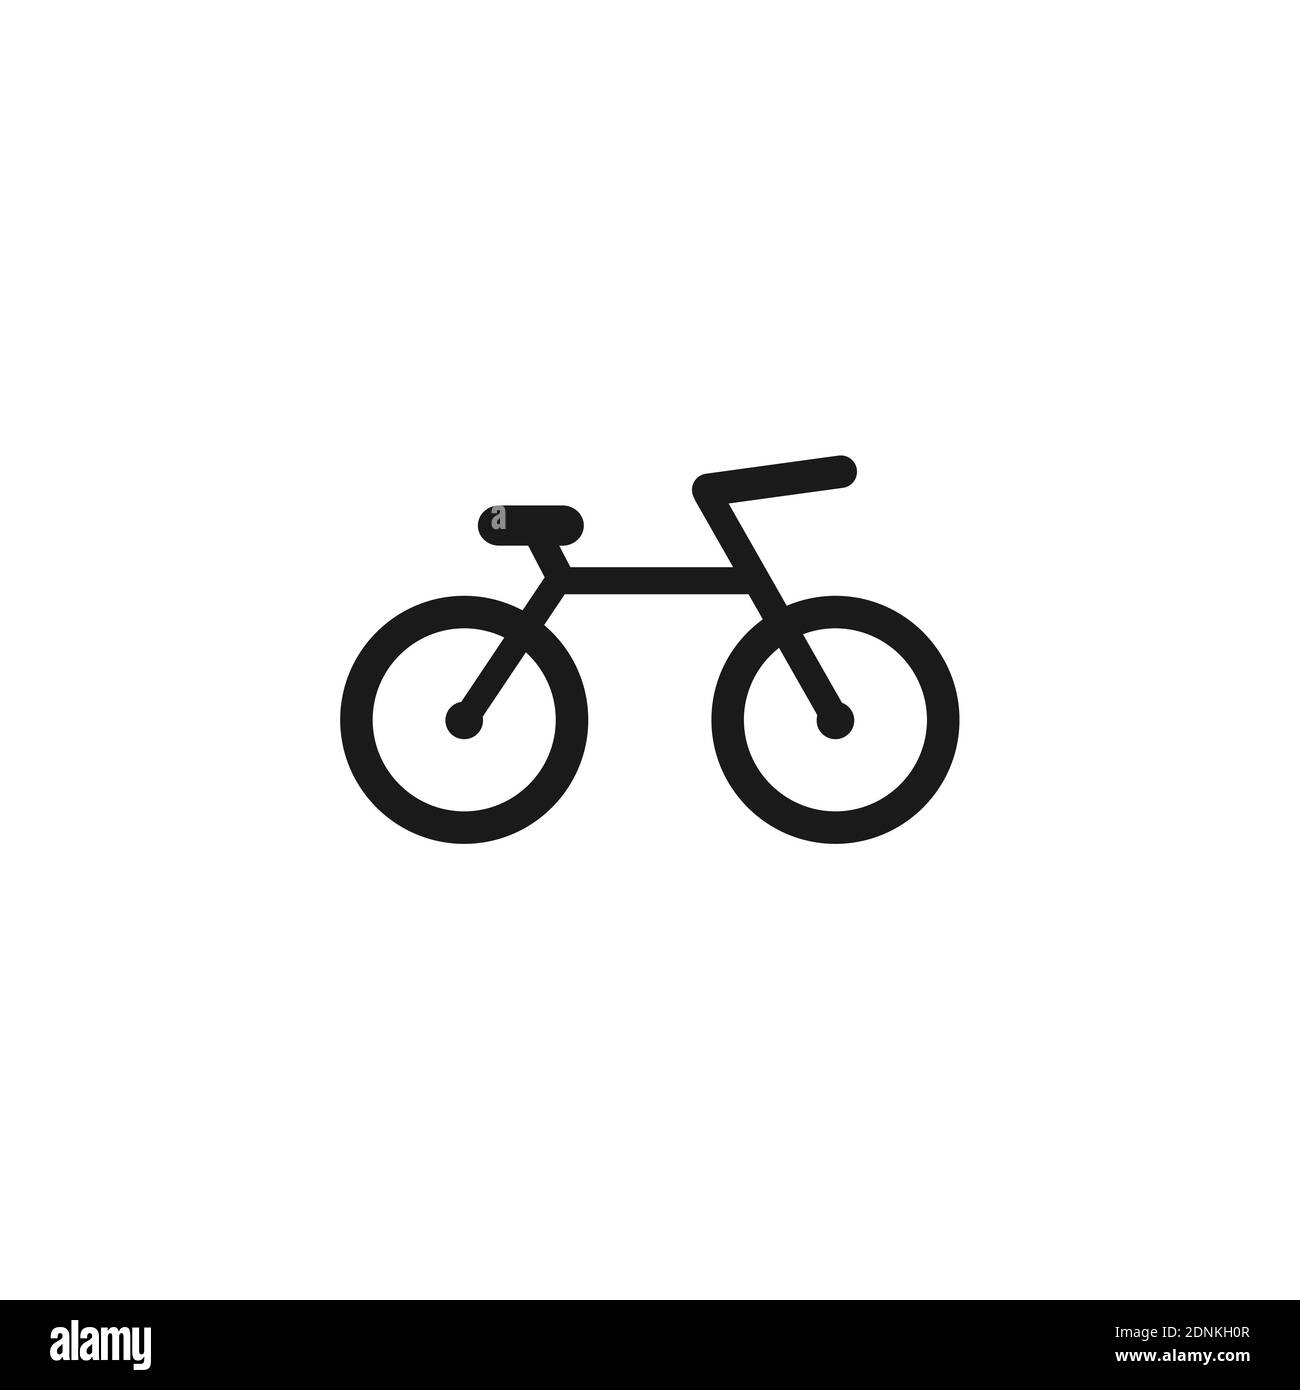 Bicycle icon. Flat bike pictogram isolated on white. Vector illustration.  Eco transport symbol. Healthy journey logo. Black and white Stock Vector  Image & Art - Alamy